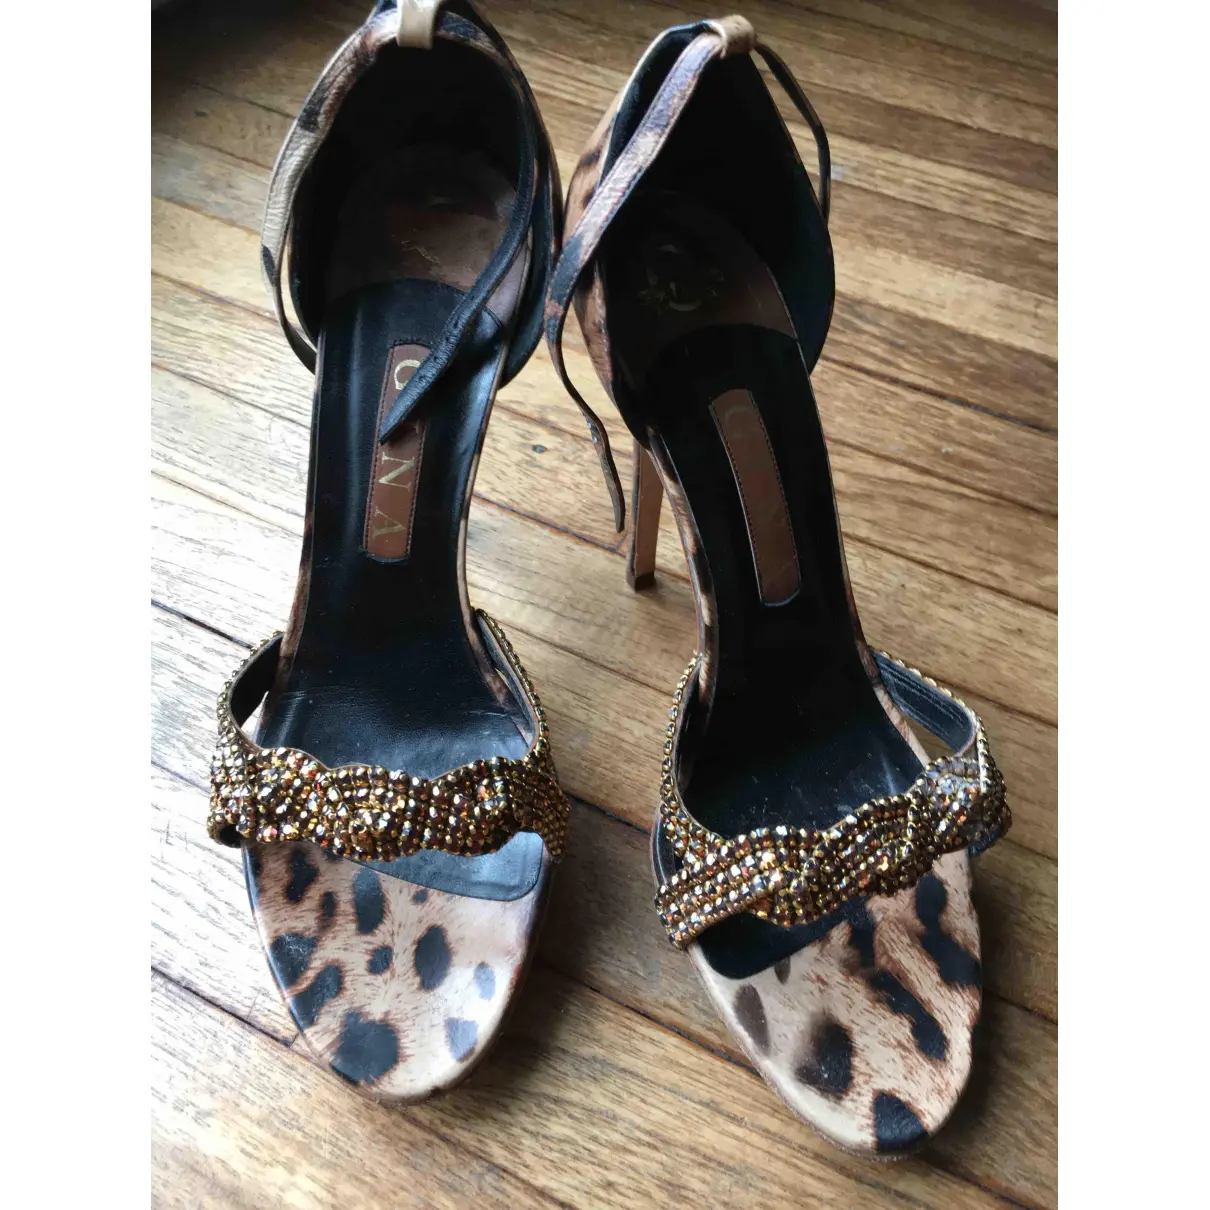 Buy Gina Glitter heels online